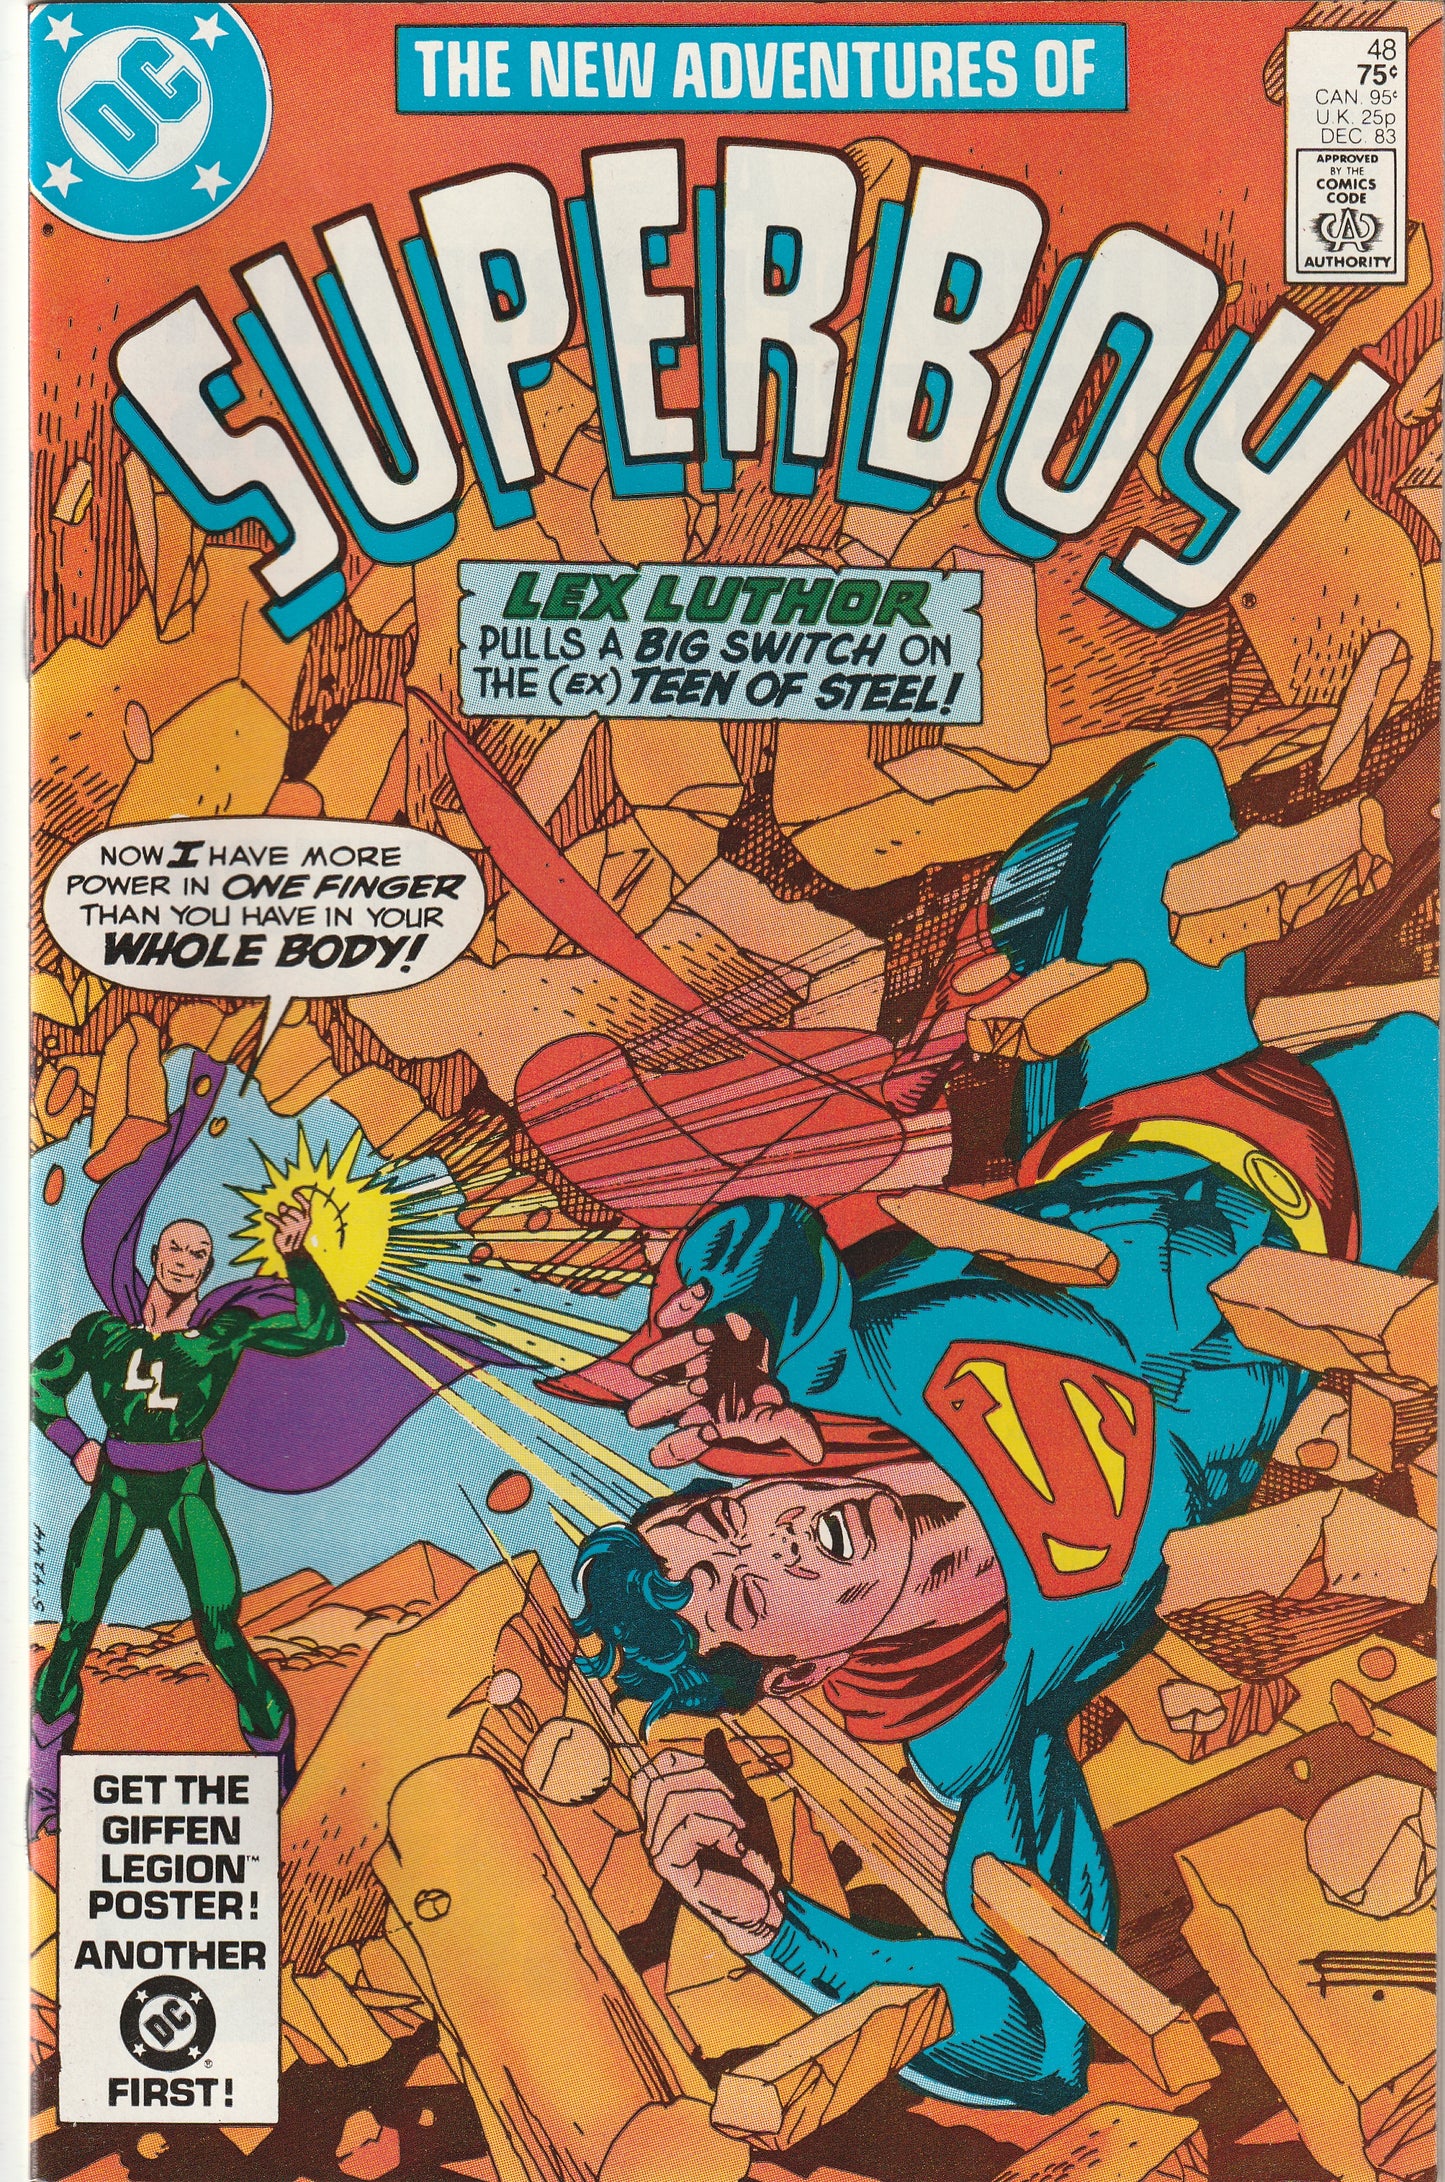 New Adventures of Superboy #48 (1983)